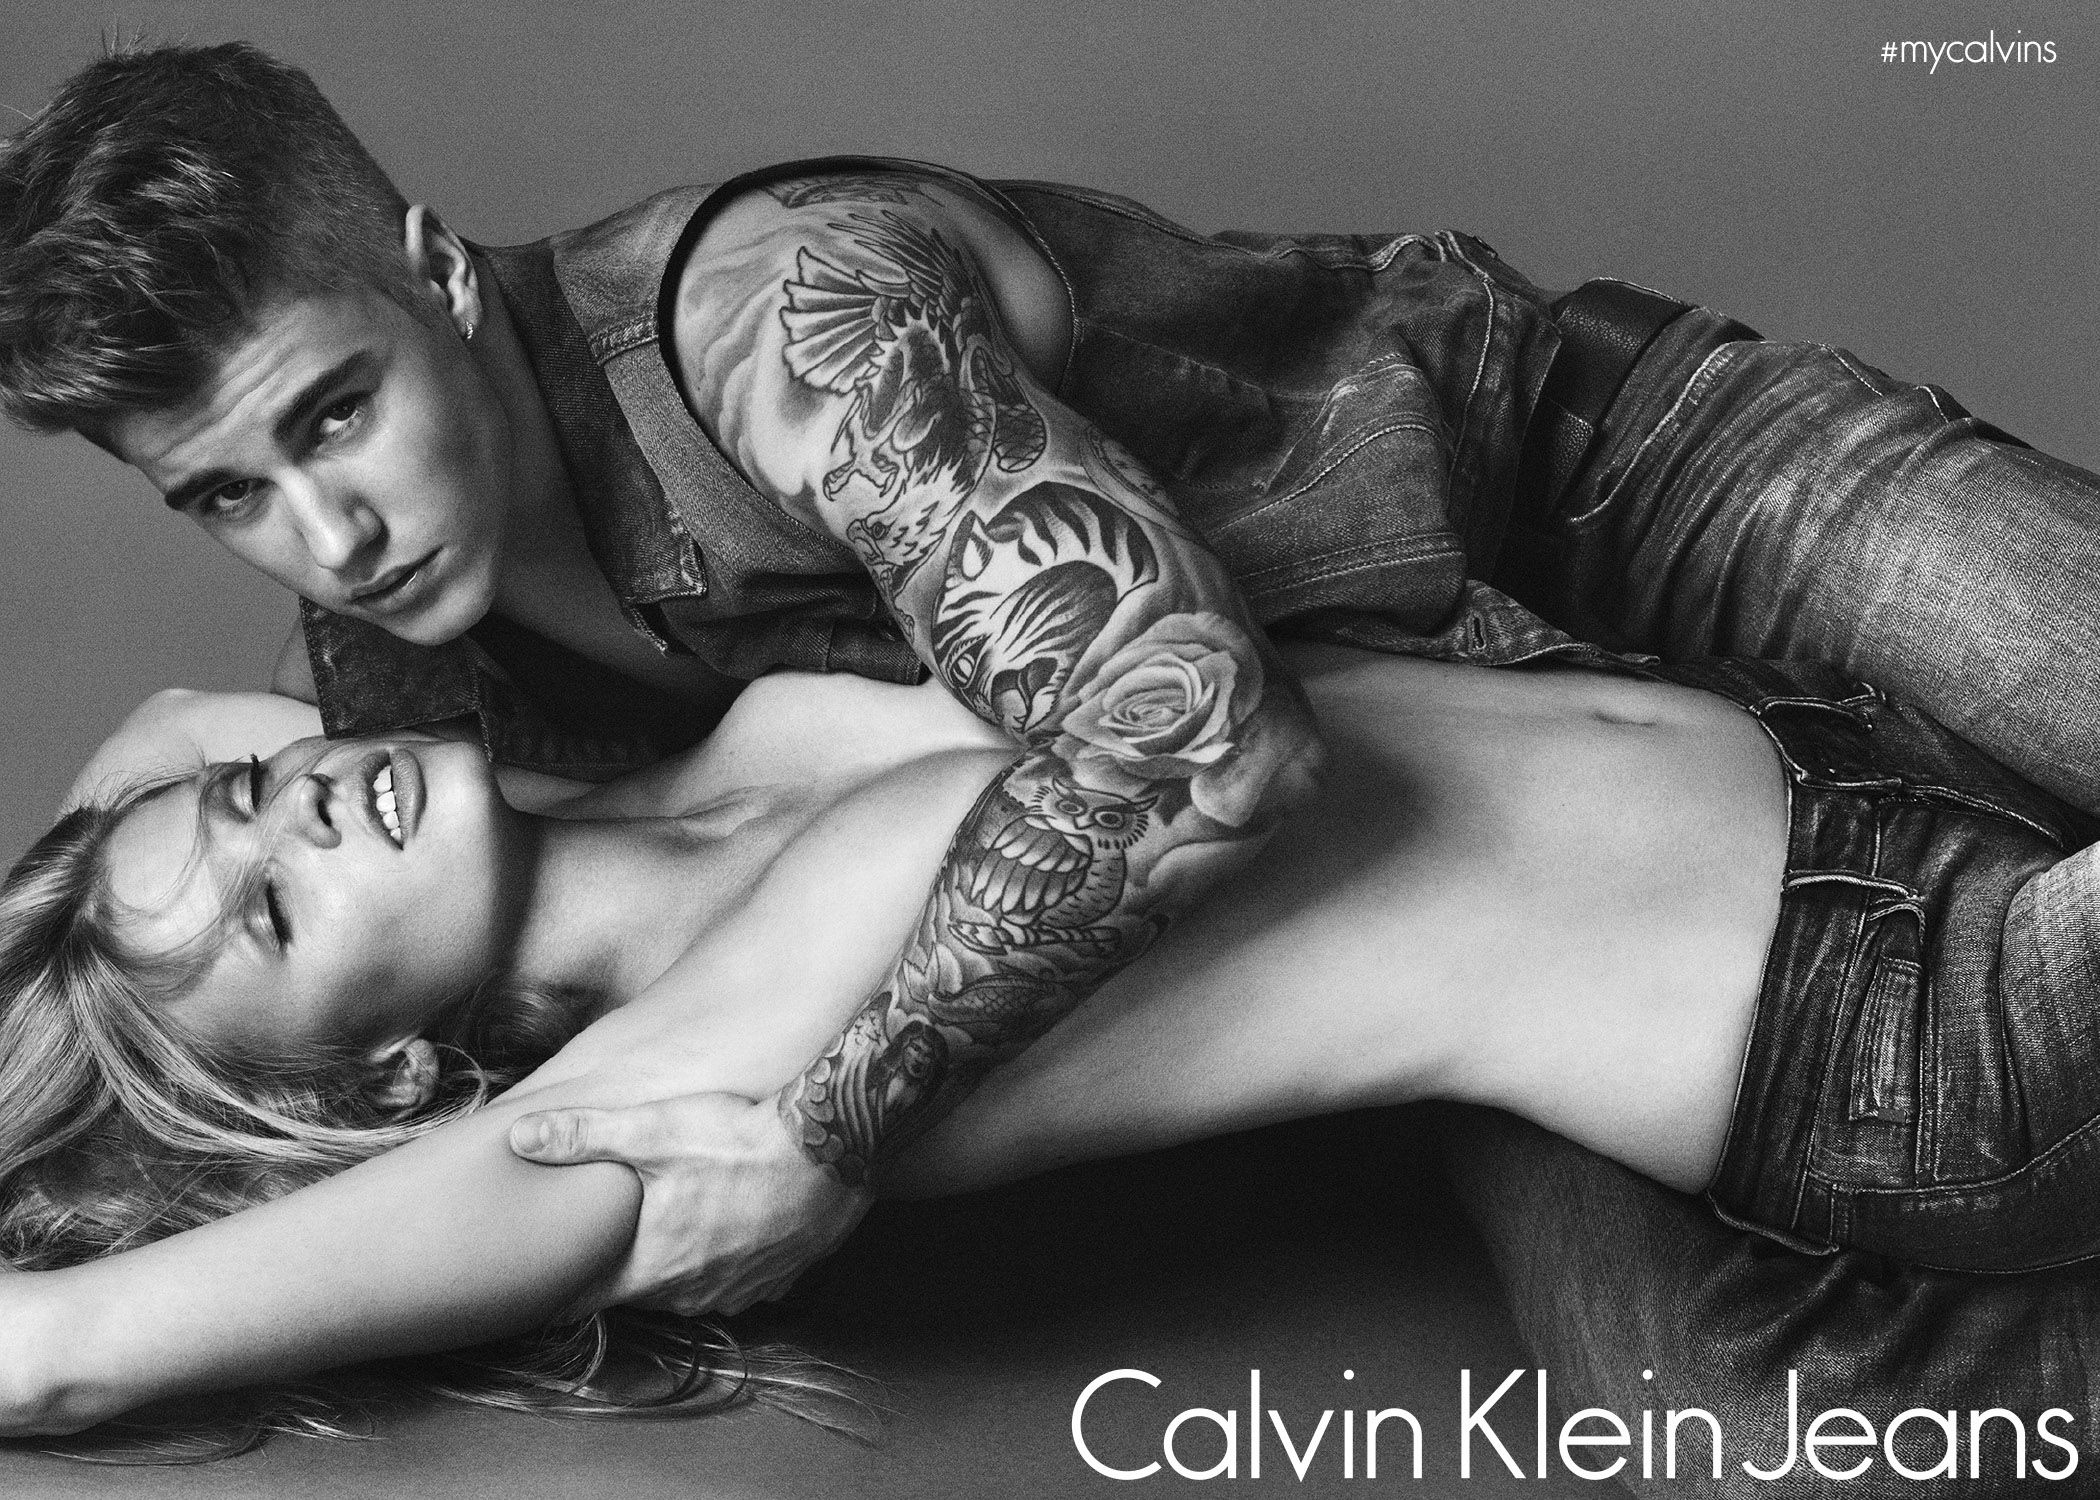 Justin Bieber features alongside Dutch supermodel Lara Stone in the Spring 2015 Calvin Klein Jeans and Calvin Klein Underwear global multi-media advertising campaign.